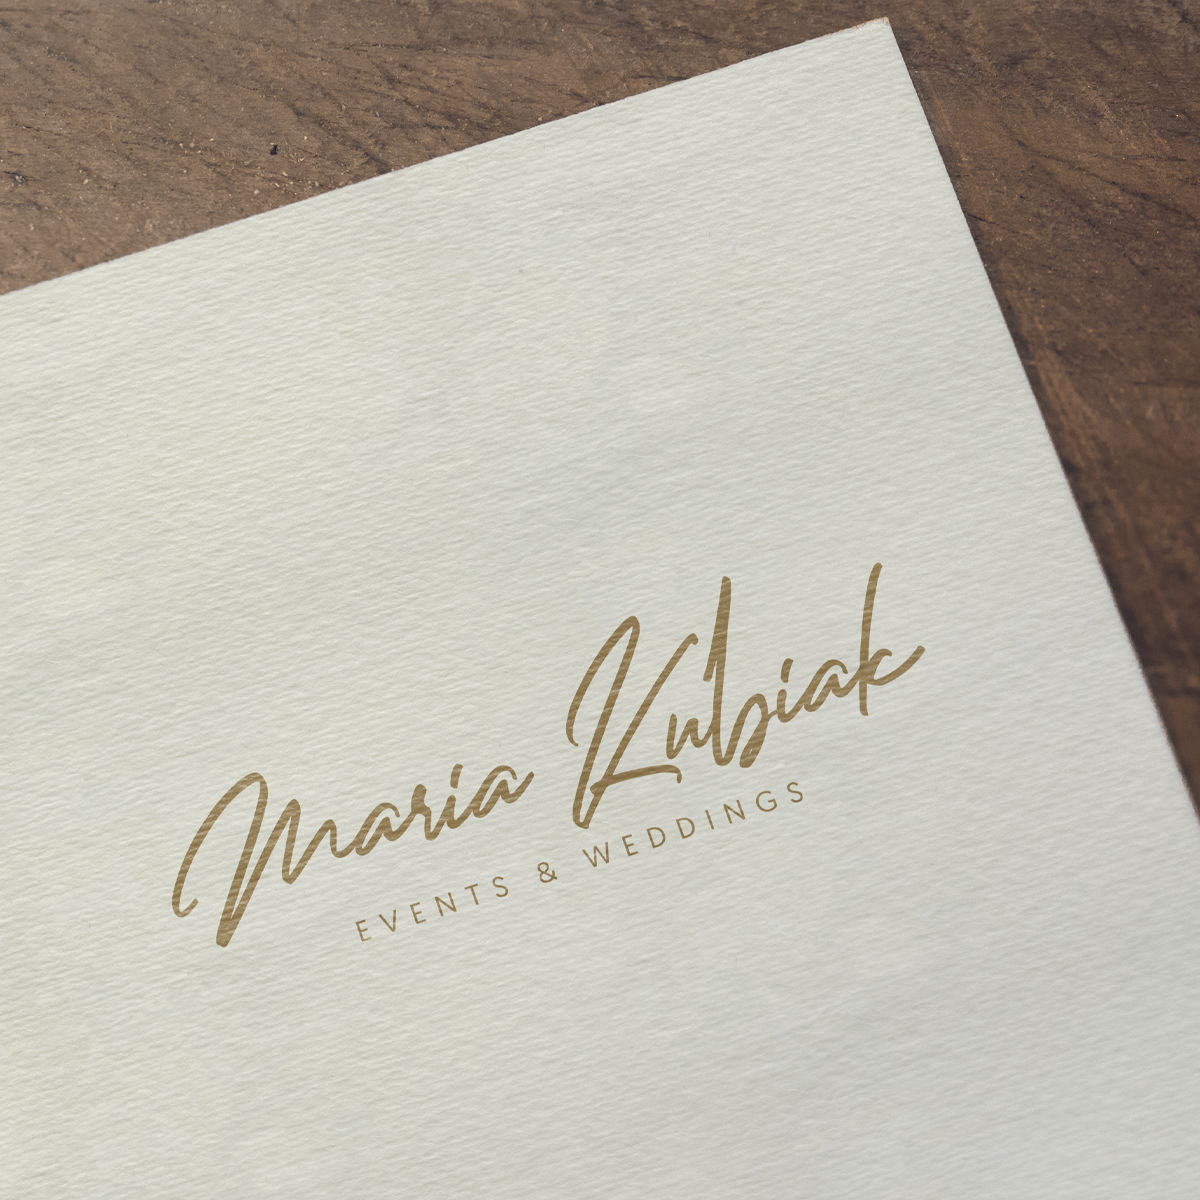 Maria Kubiak Events - projekt logo dla marki